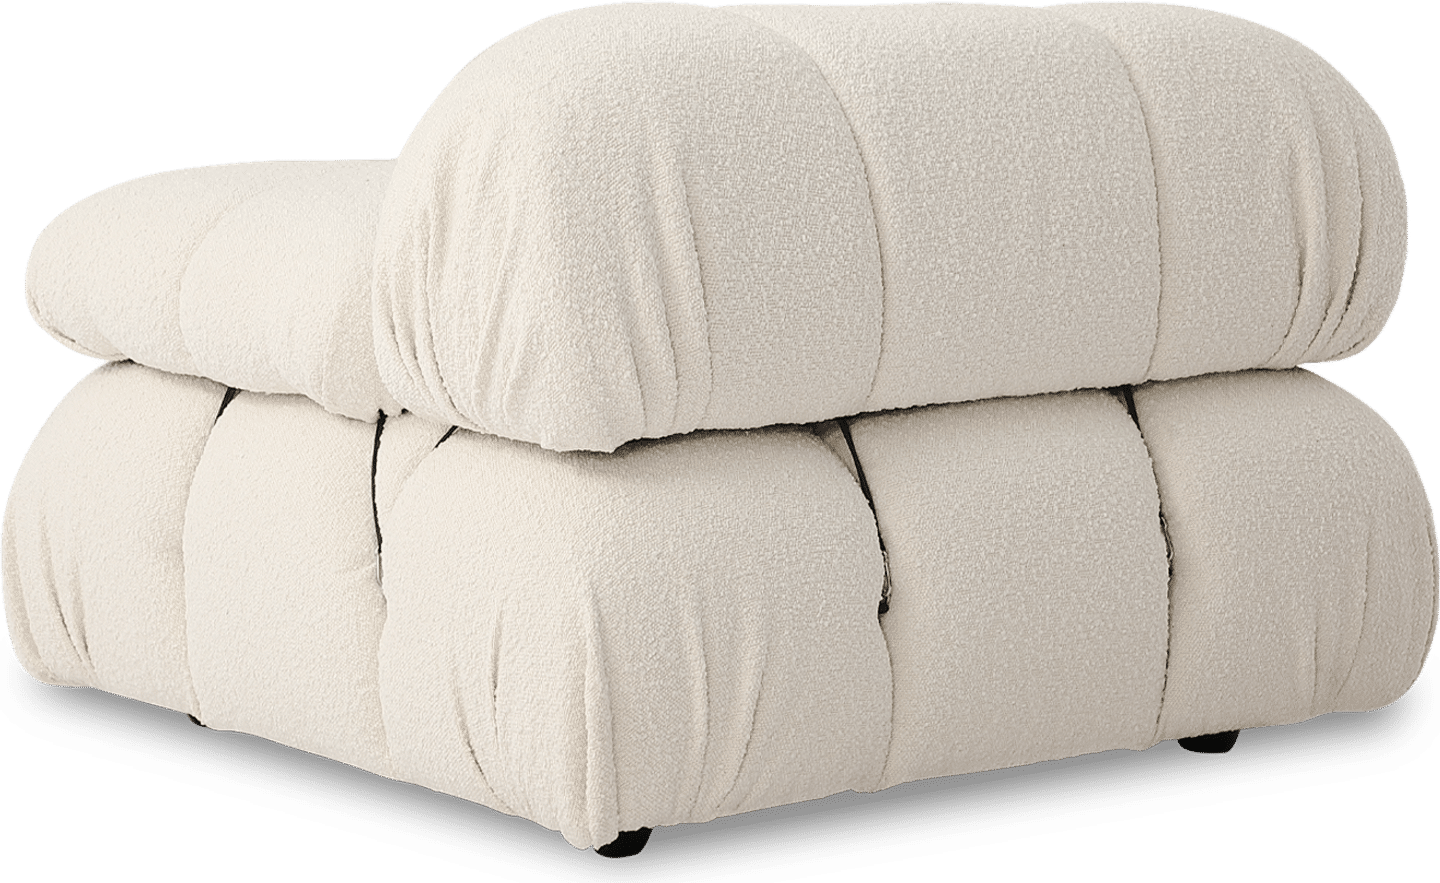 Camaleonda Style soffa med vänster arm Creamy Boucle/Boucle image.